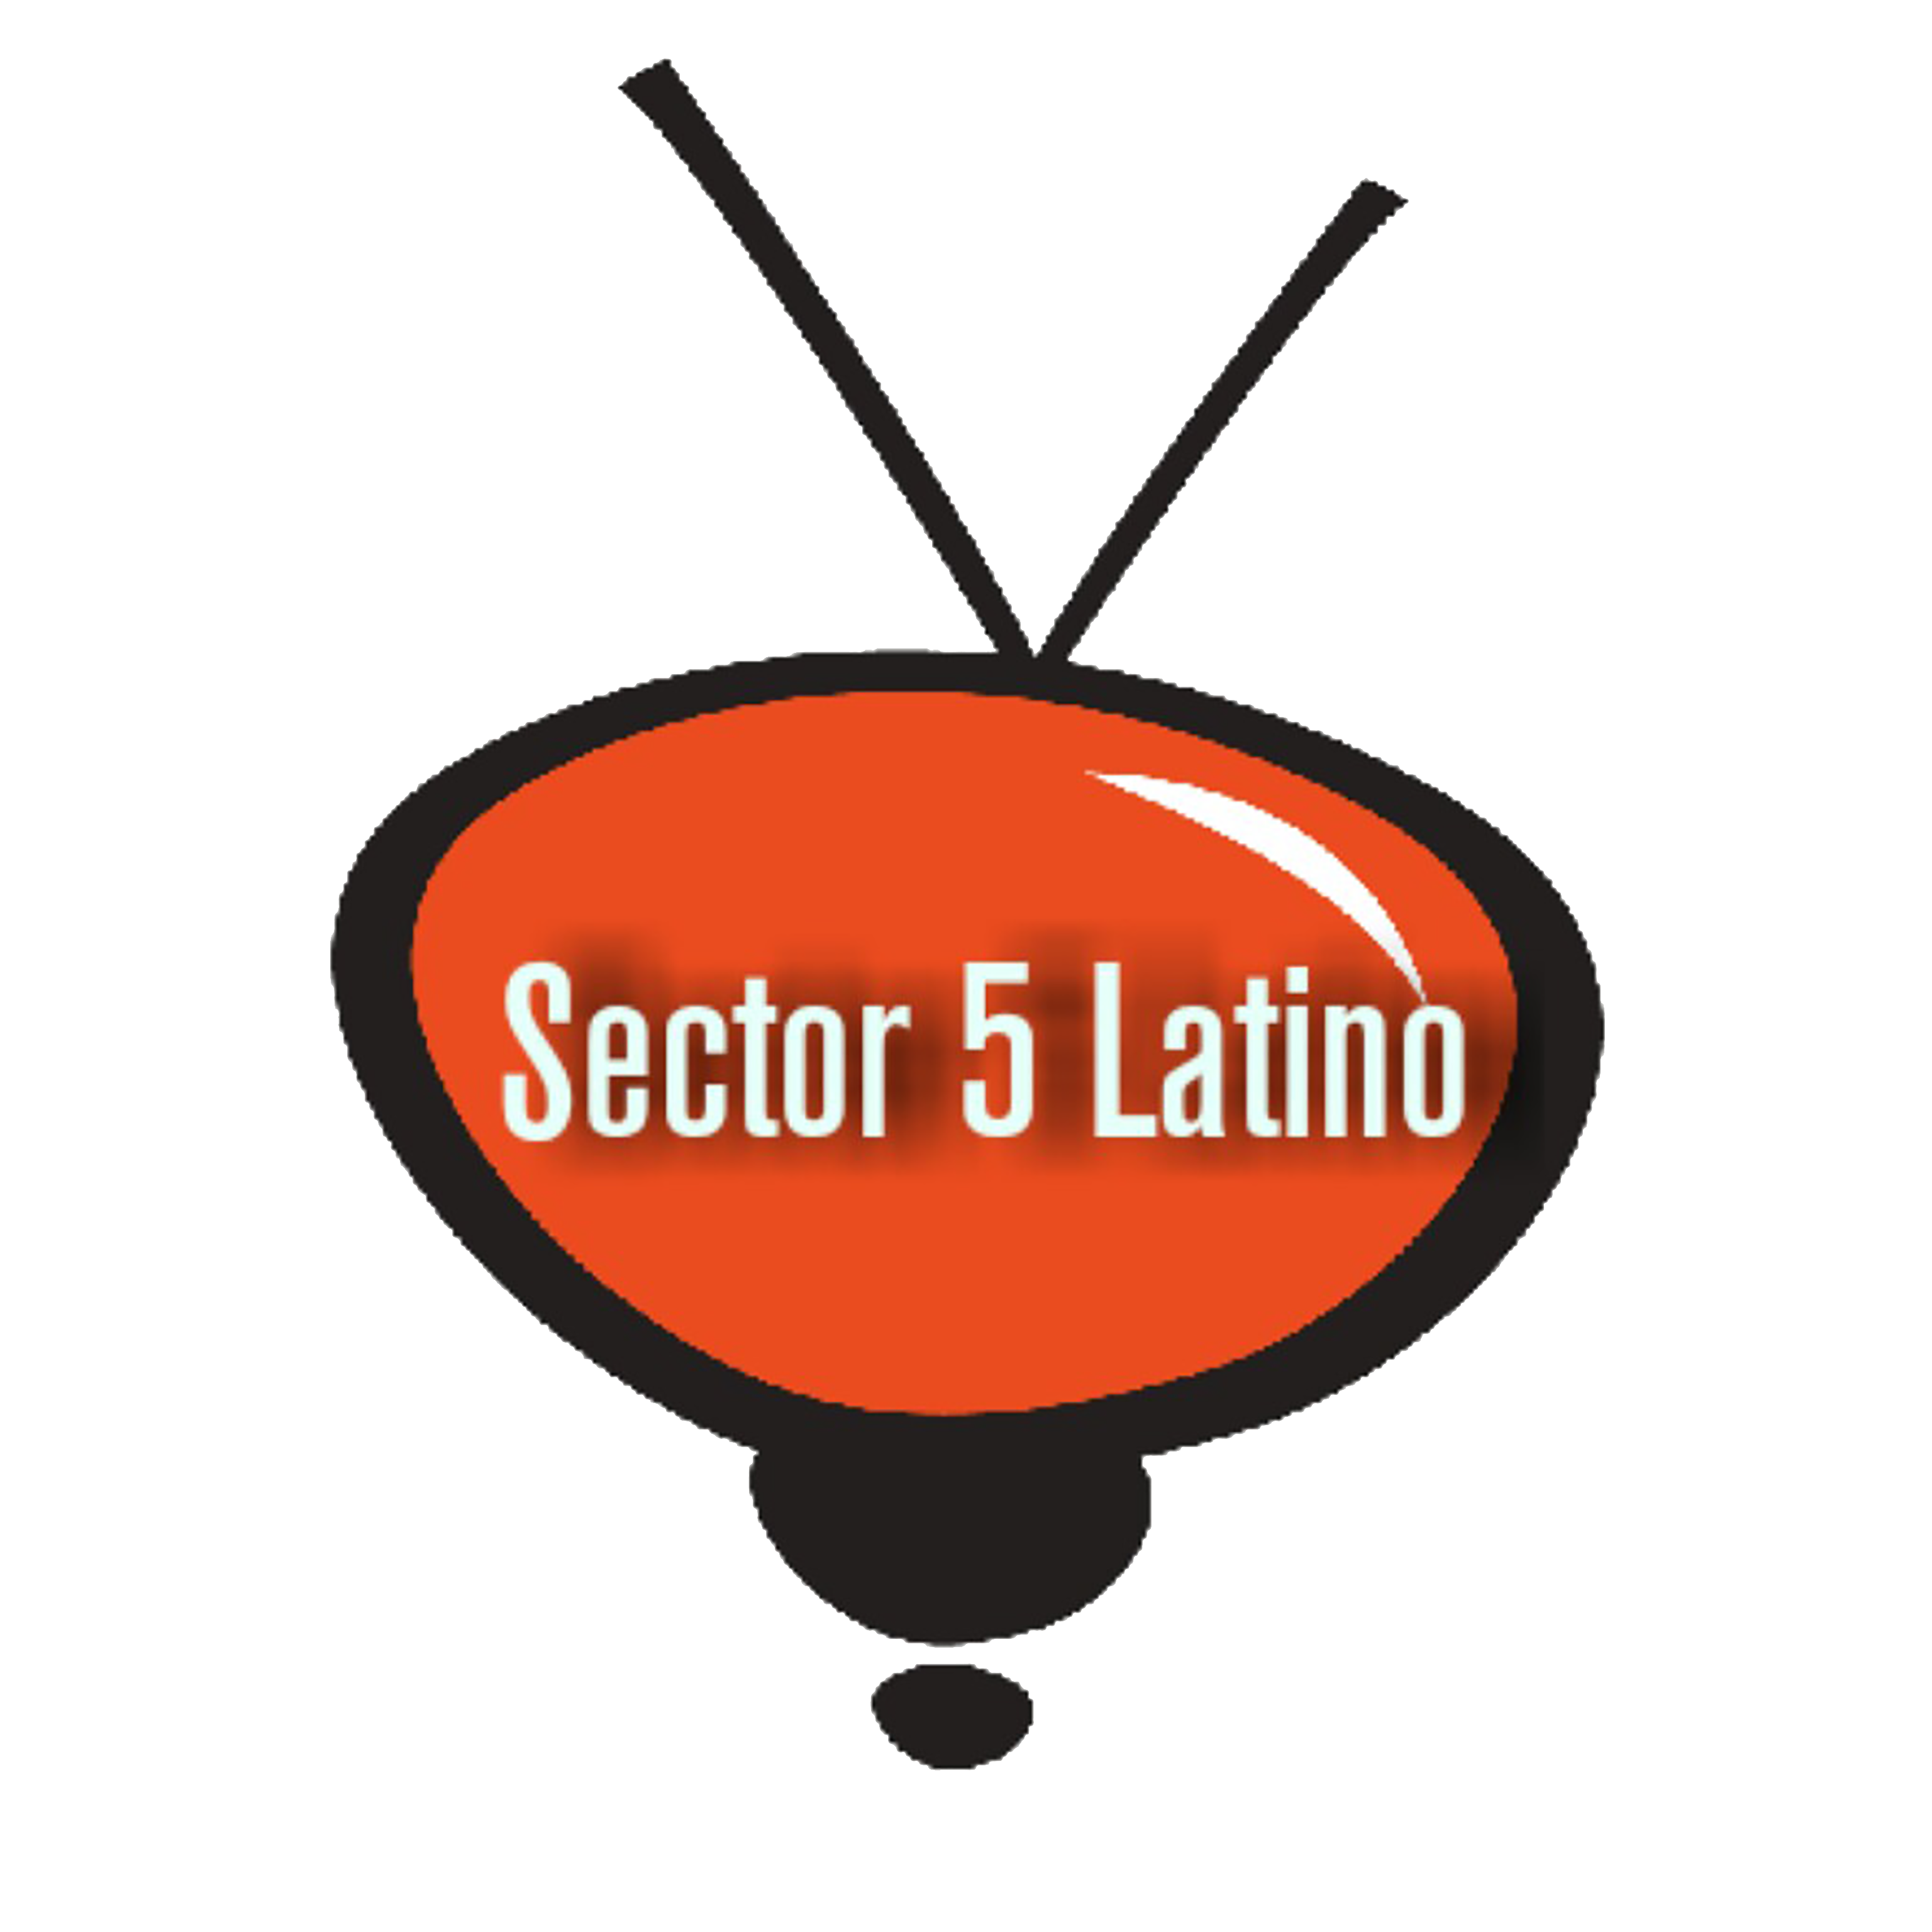 Sector 5 Latino TV